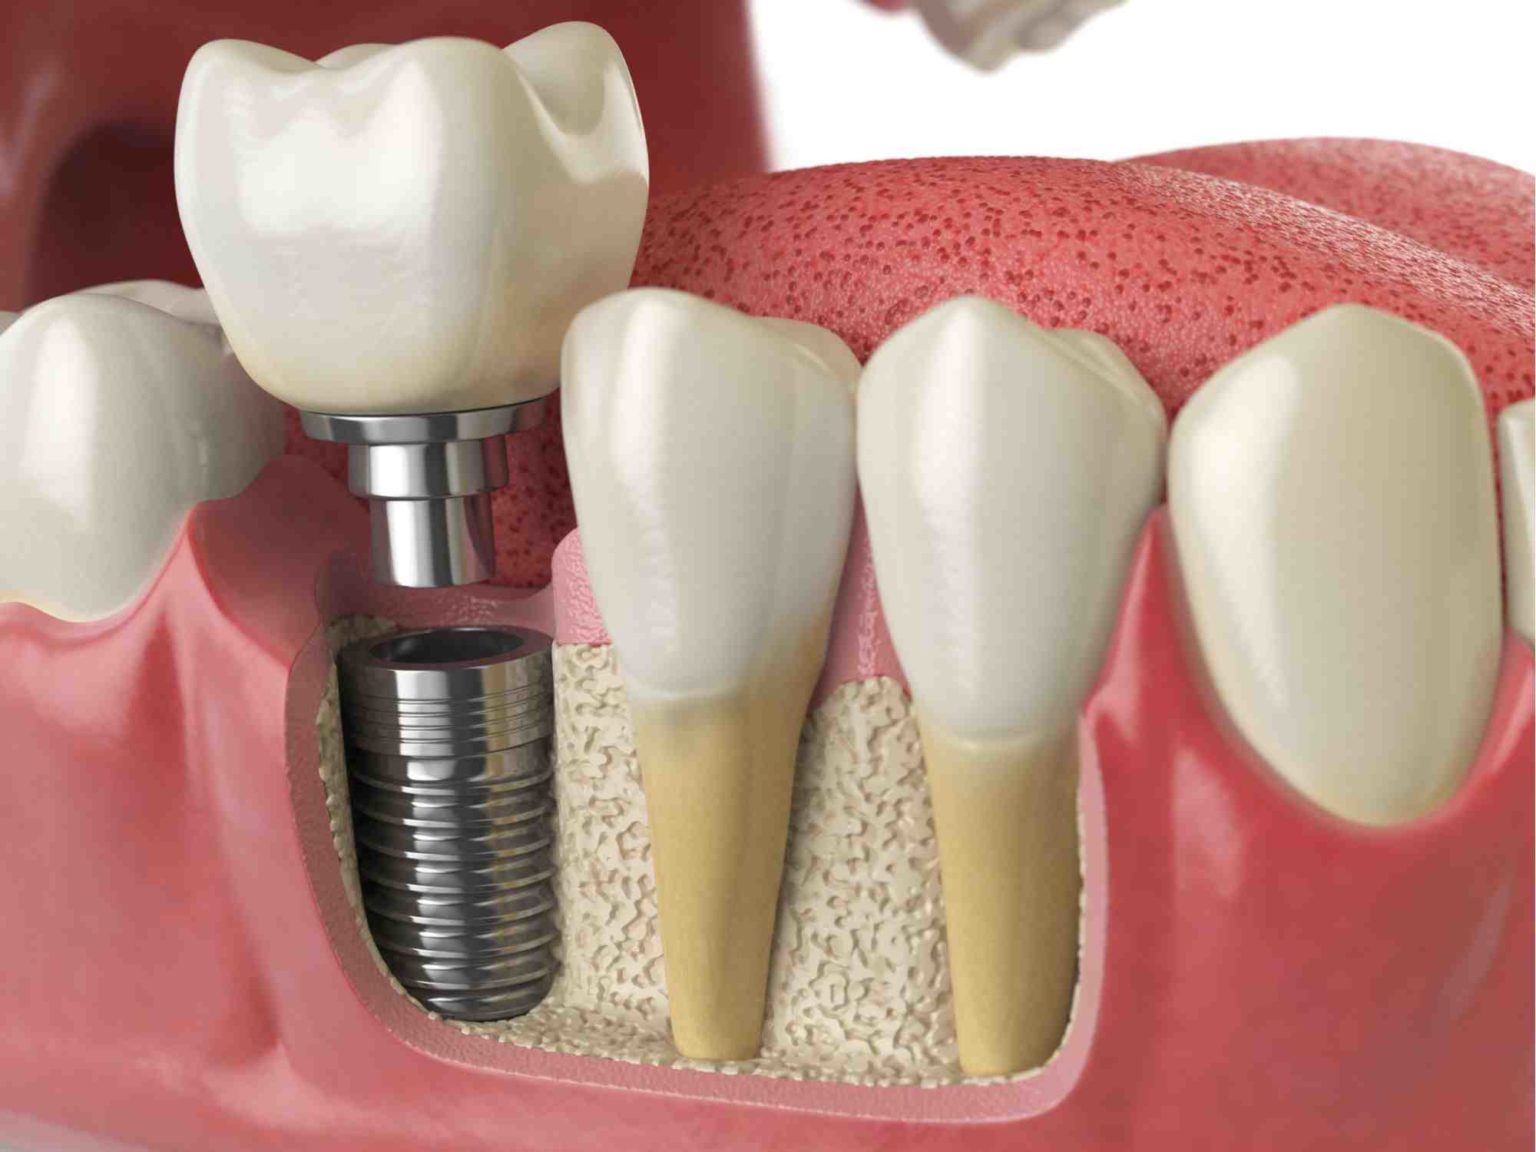 Does medicare cover dental implants